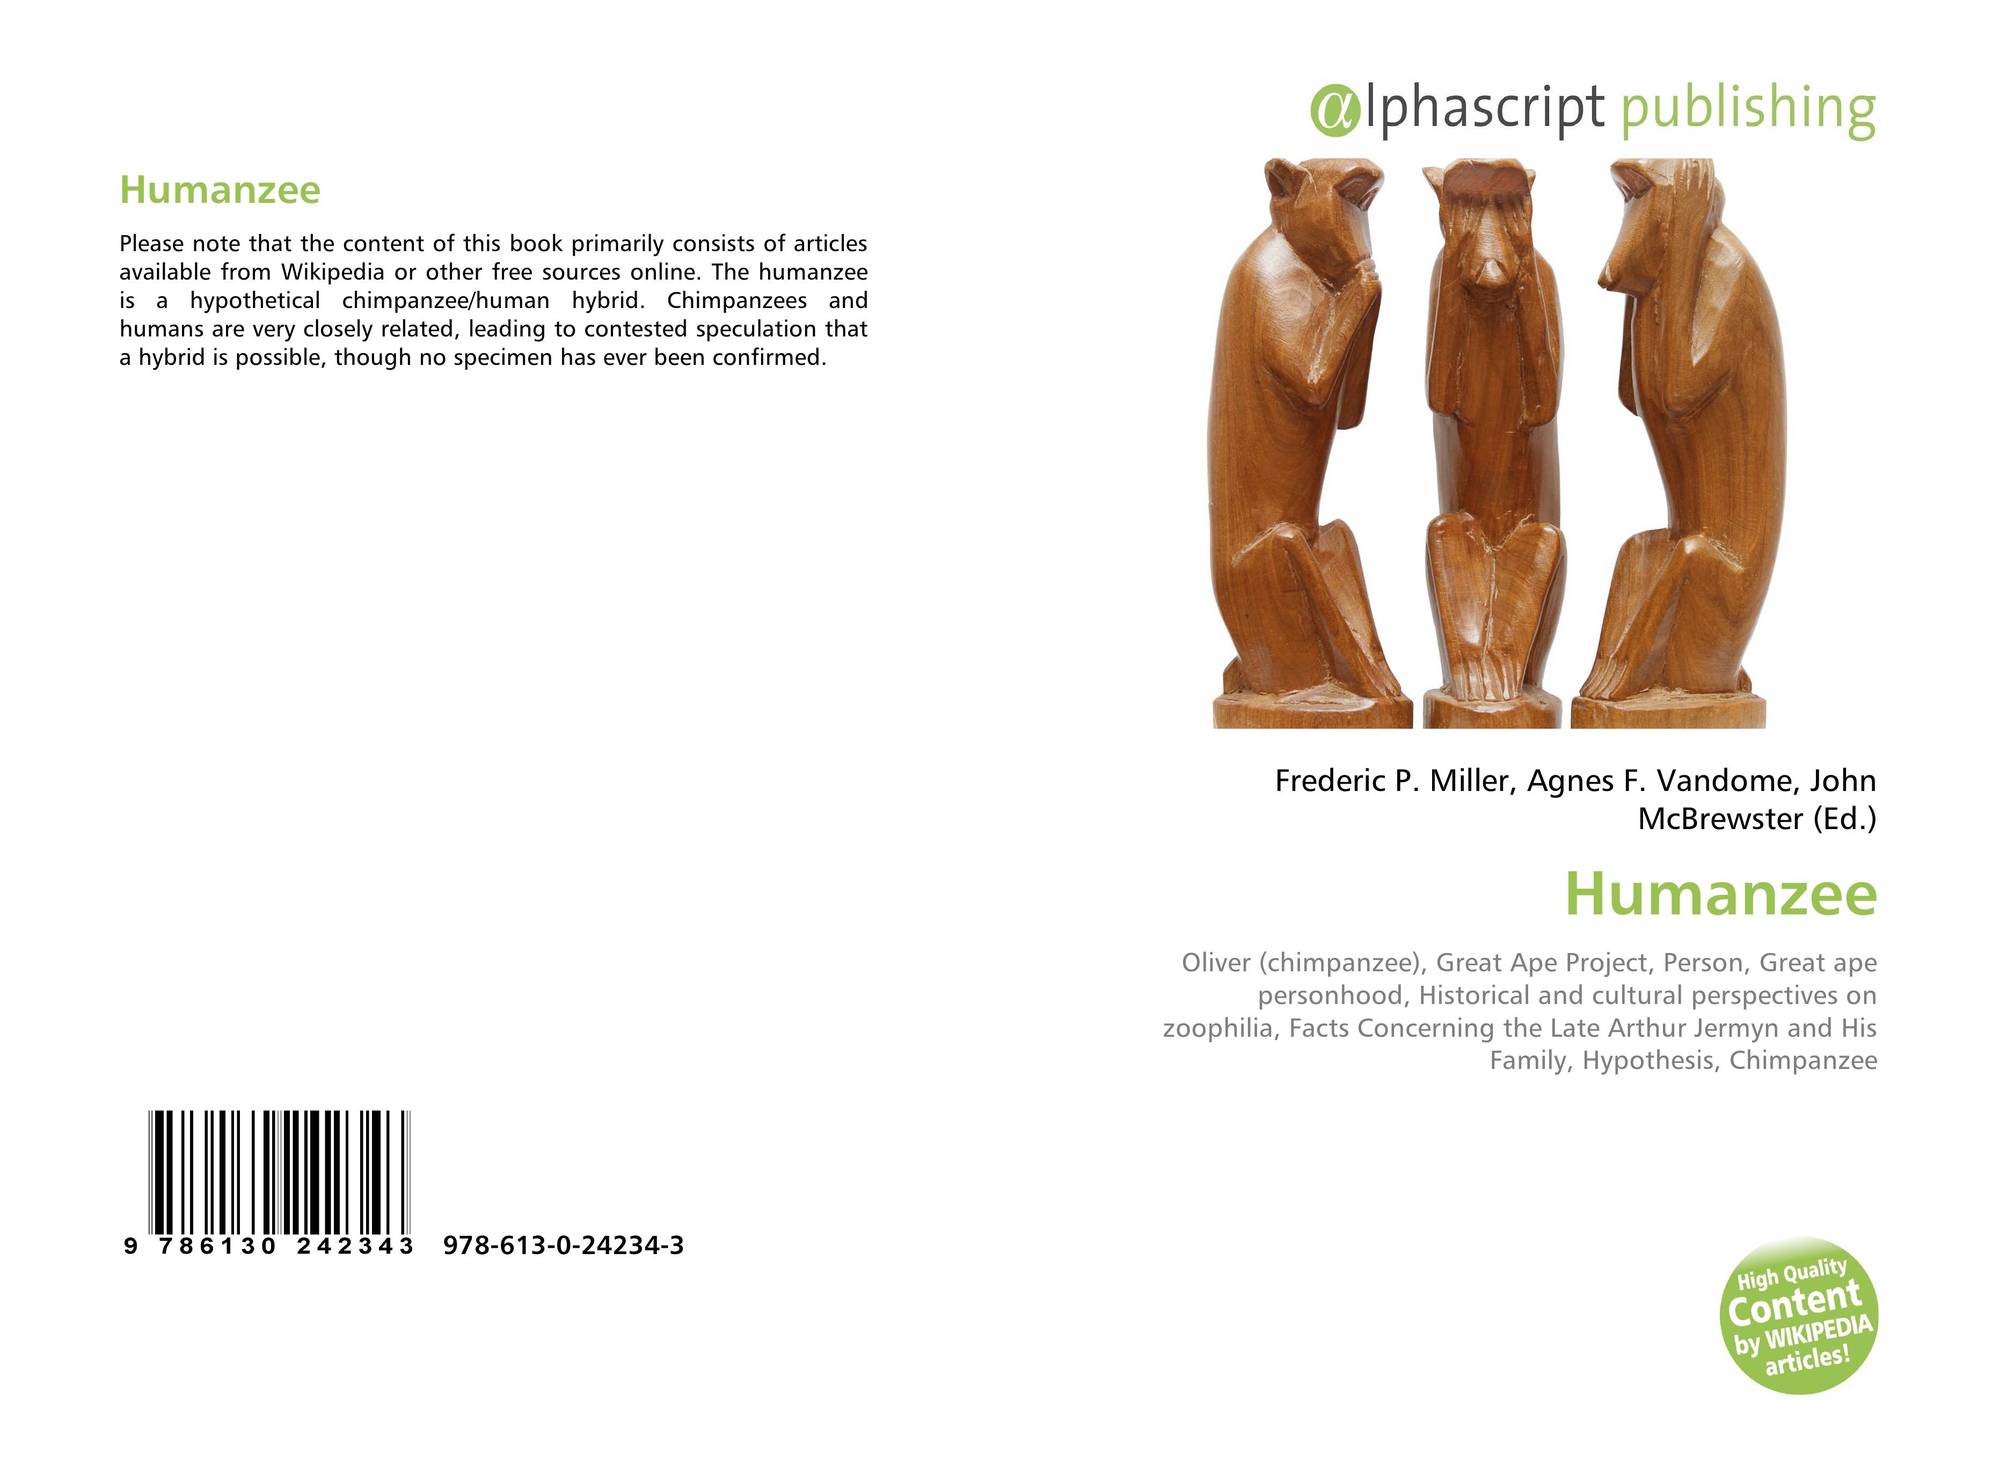 Humanzee Human